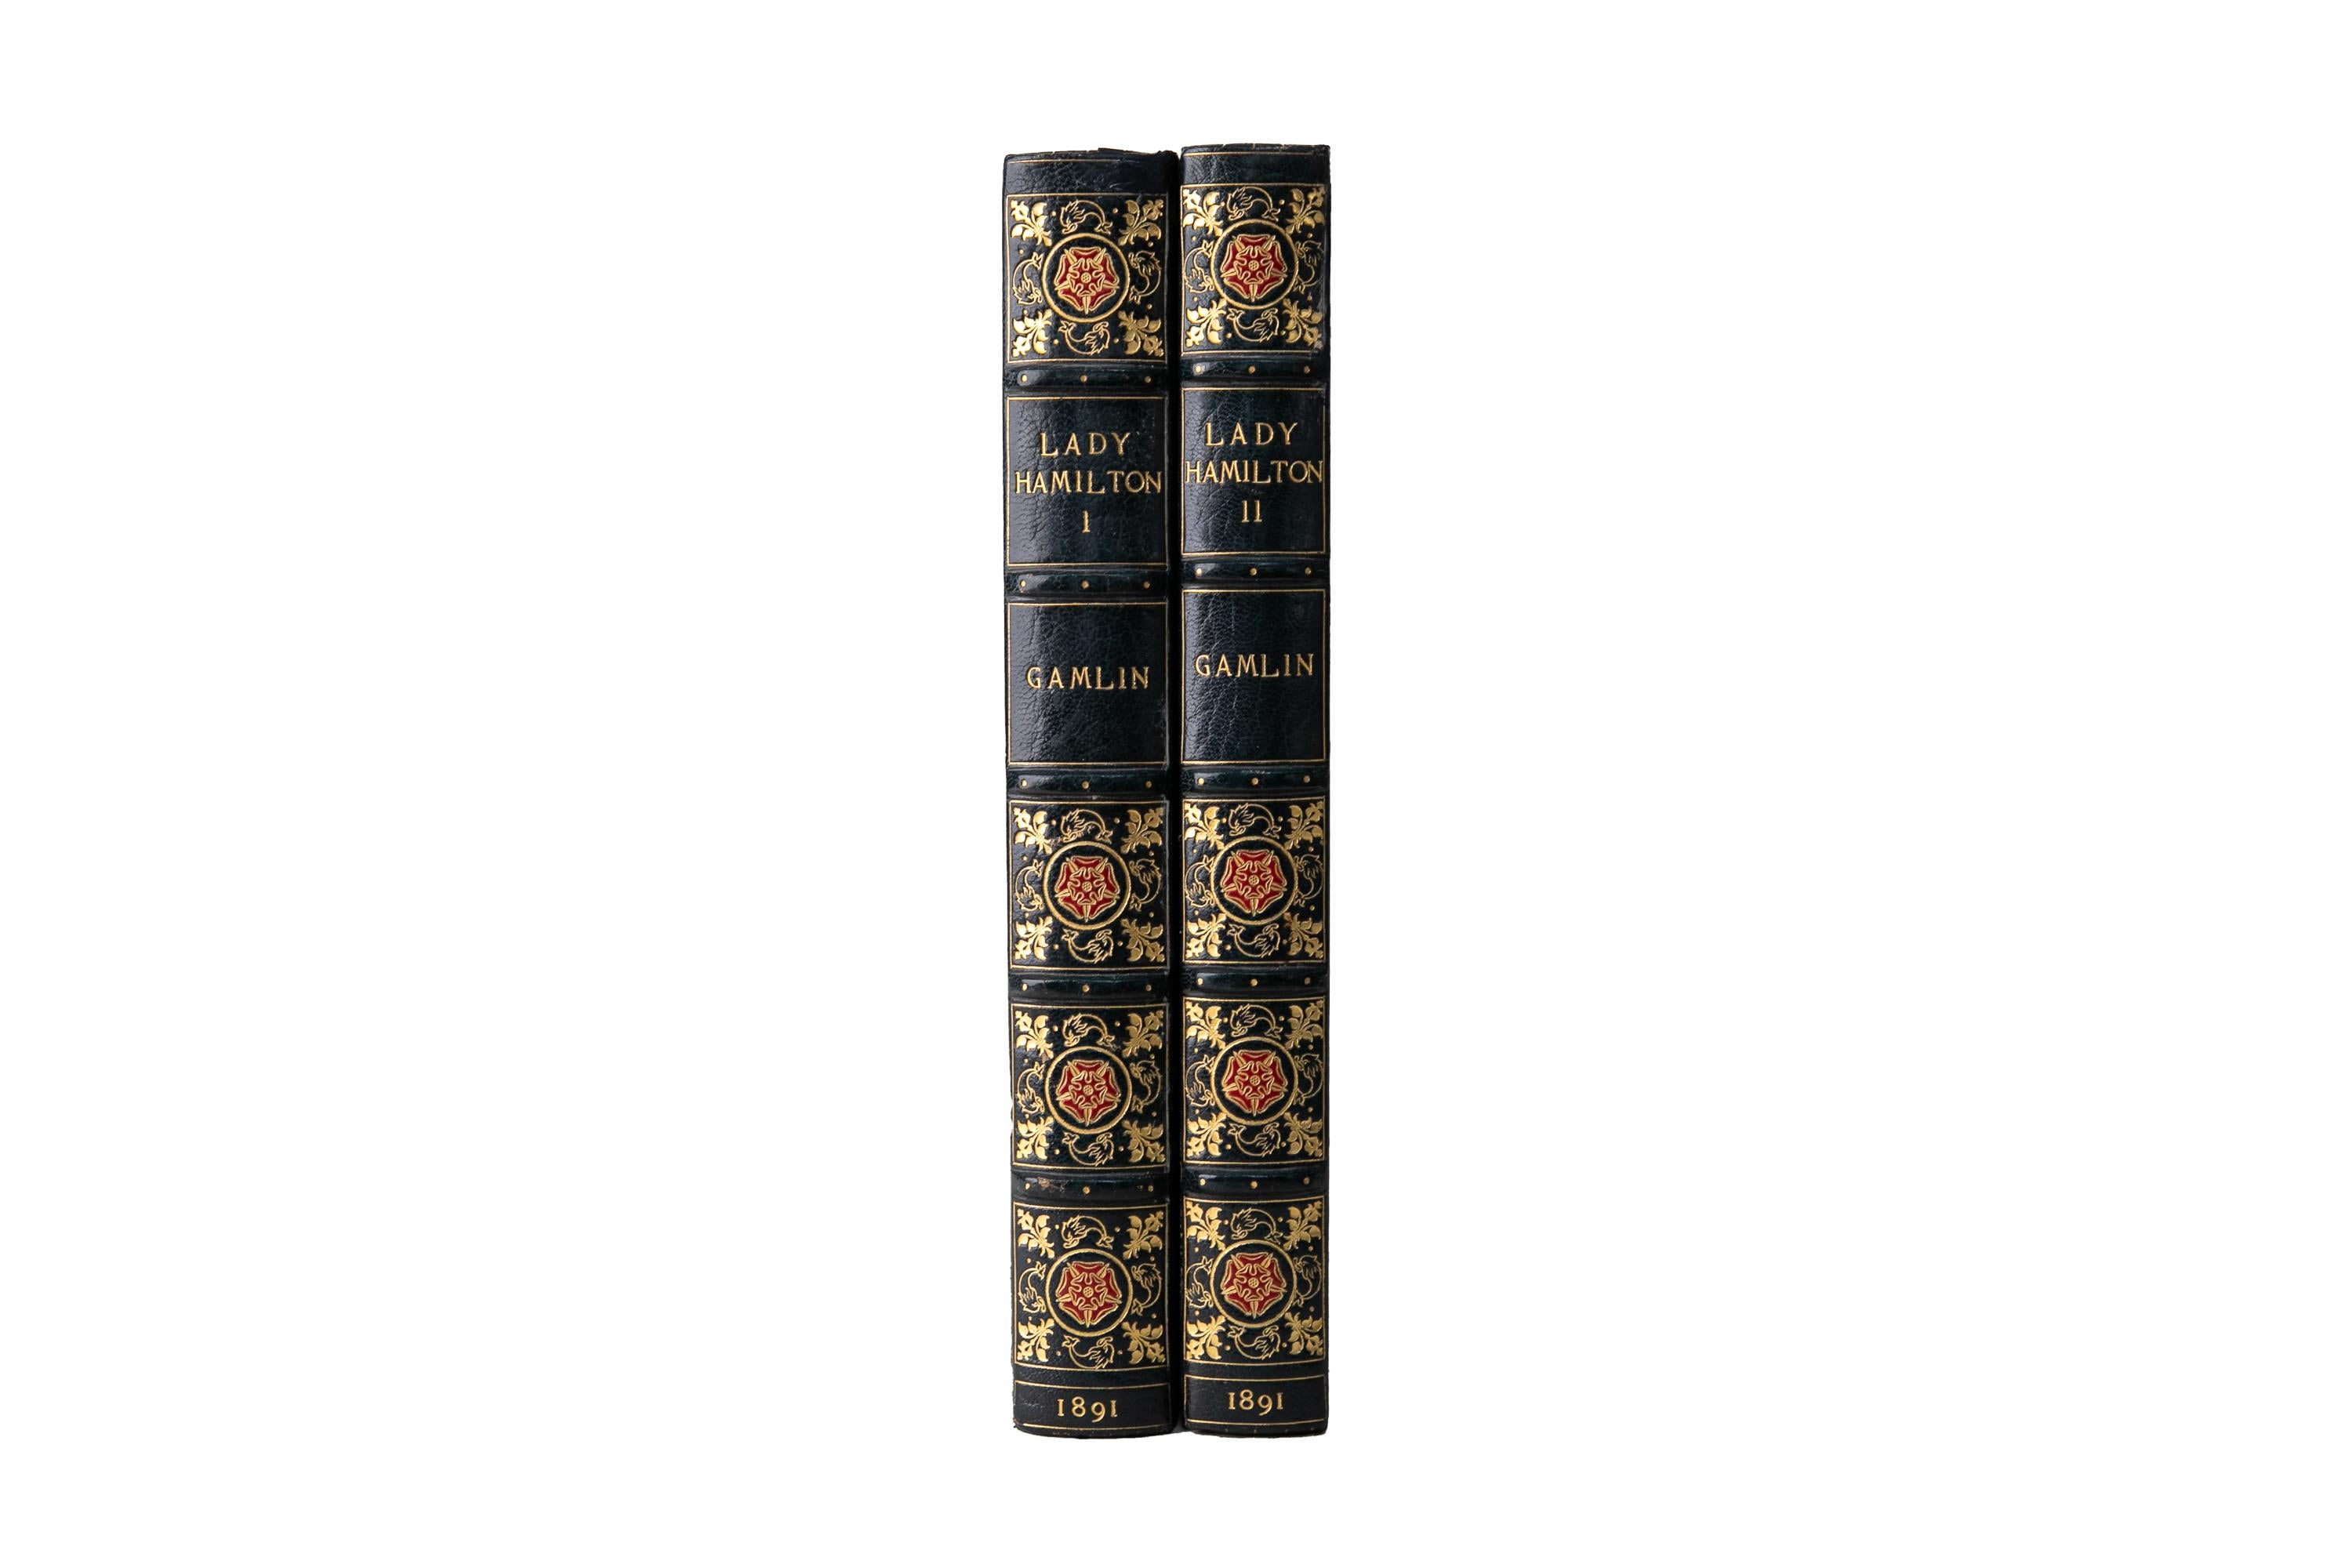 English 2 Volumes. Hilda Gamlin, Emma: Lady Hamilton.